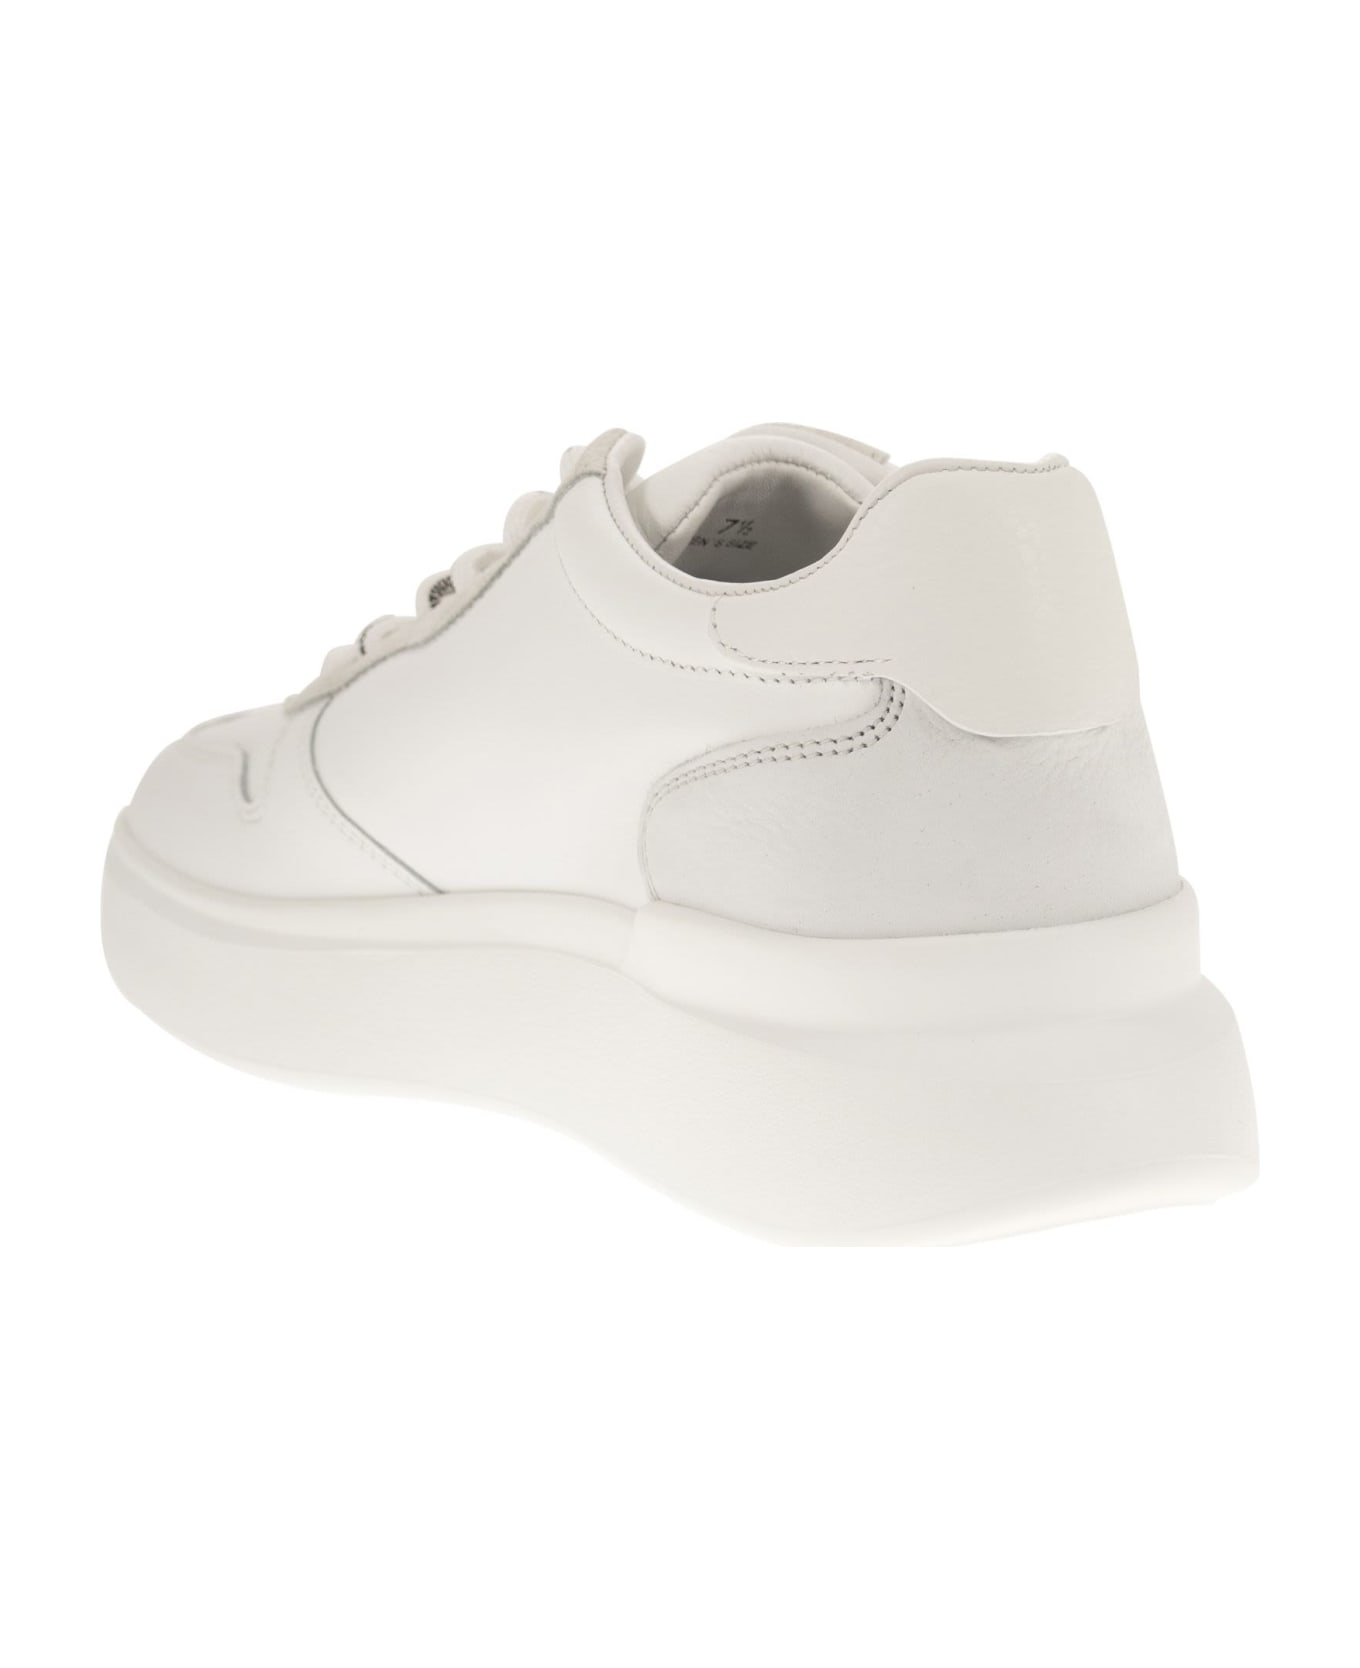 Hogan H580 - Sneakers - White